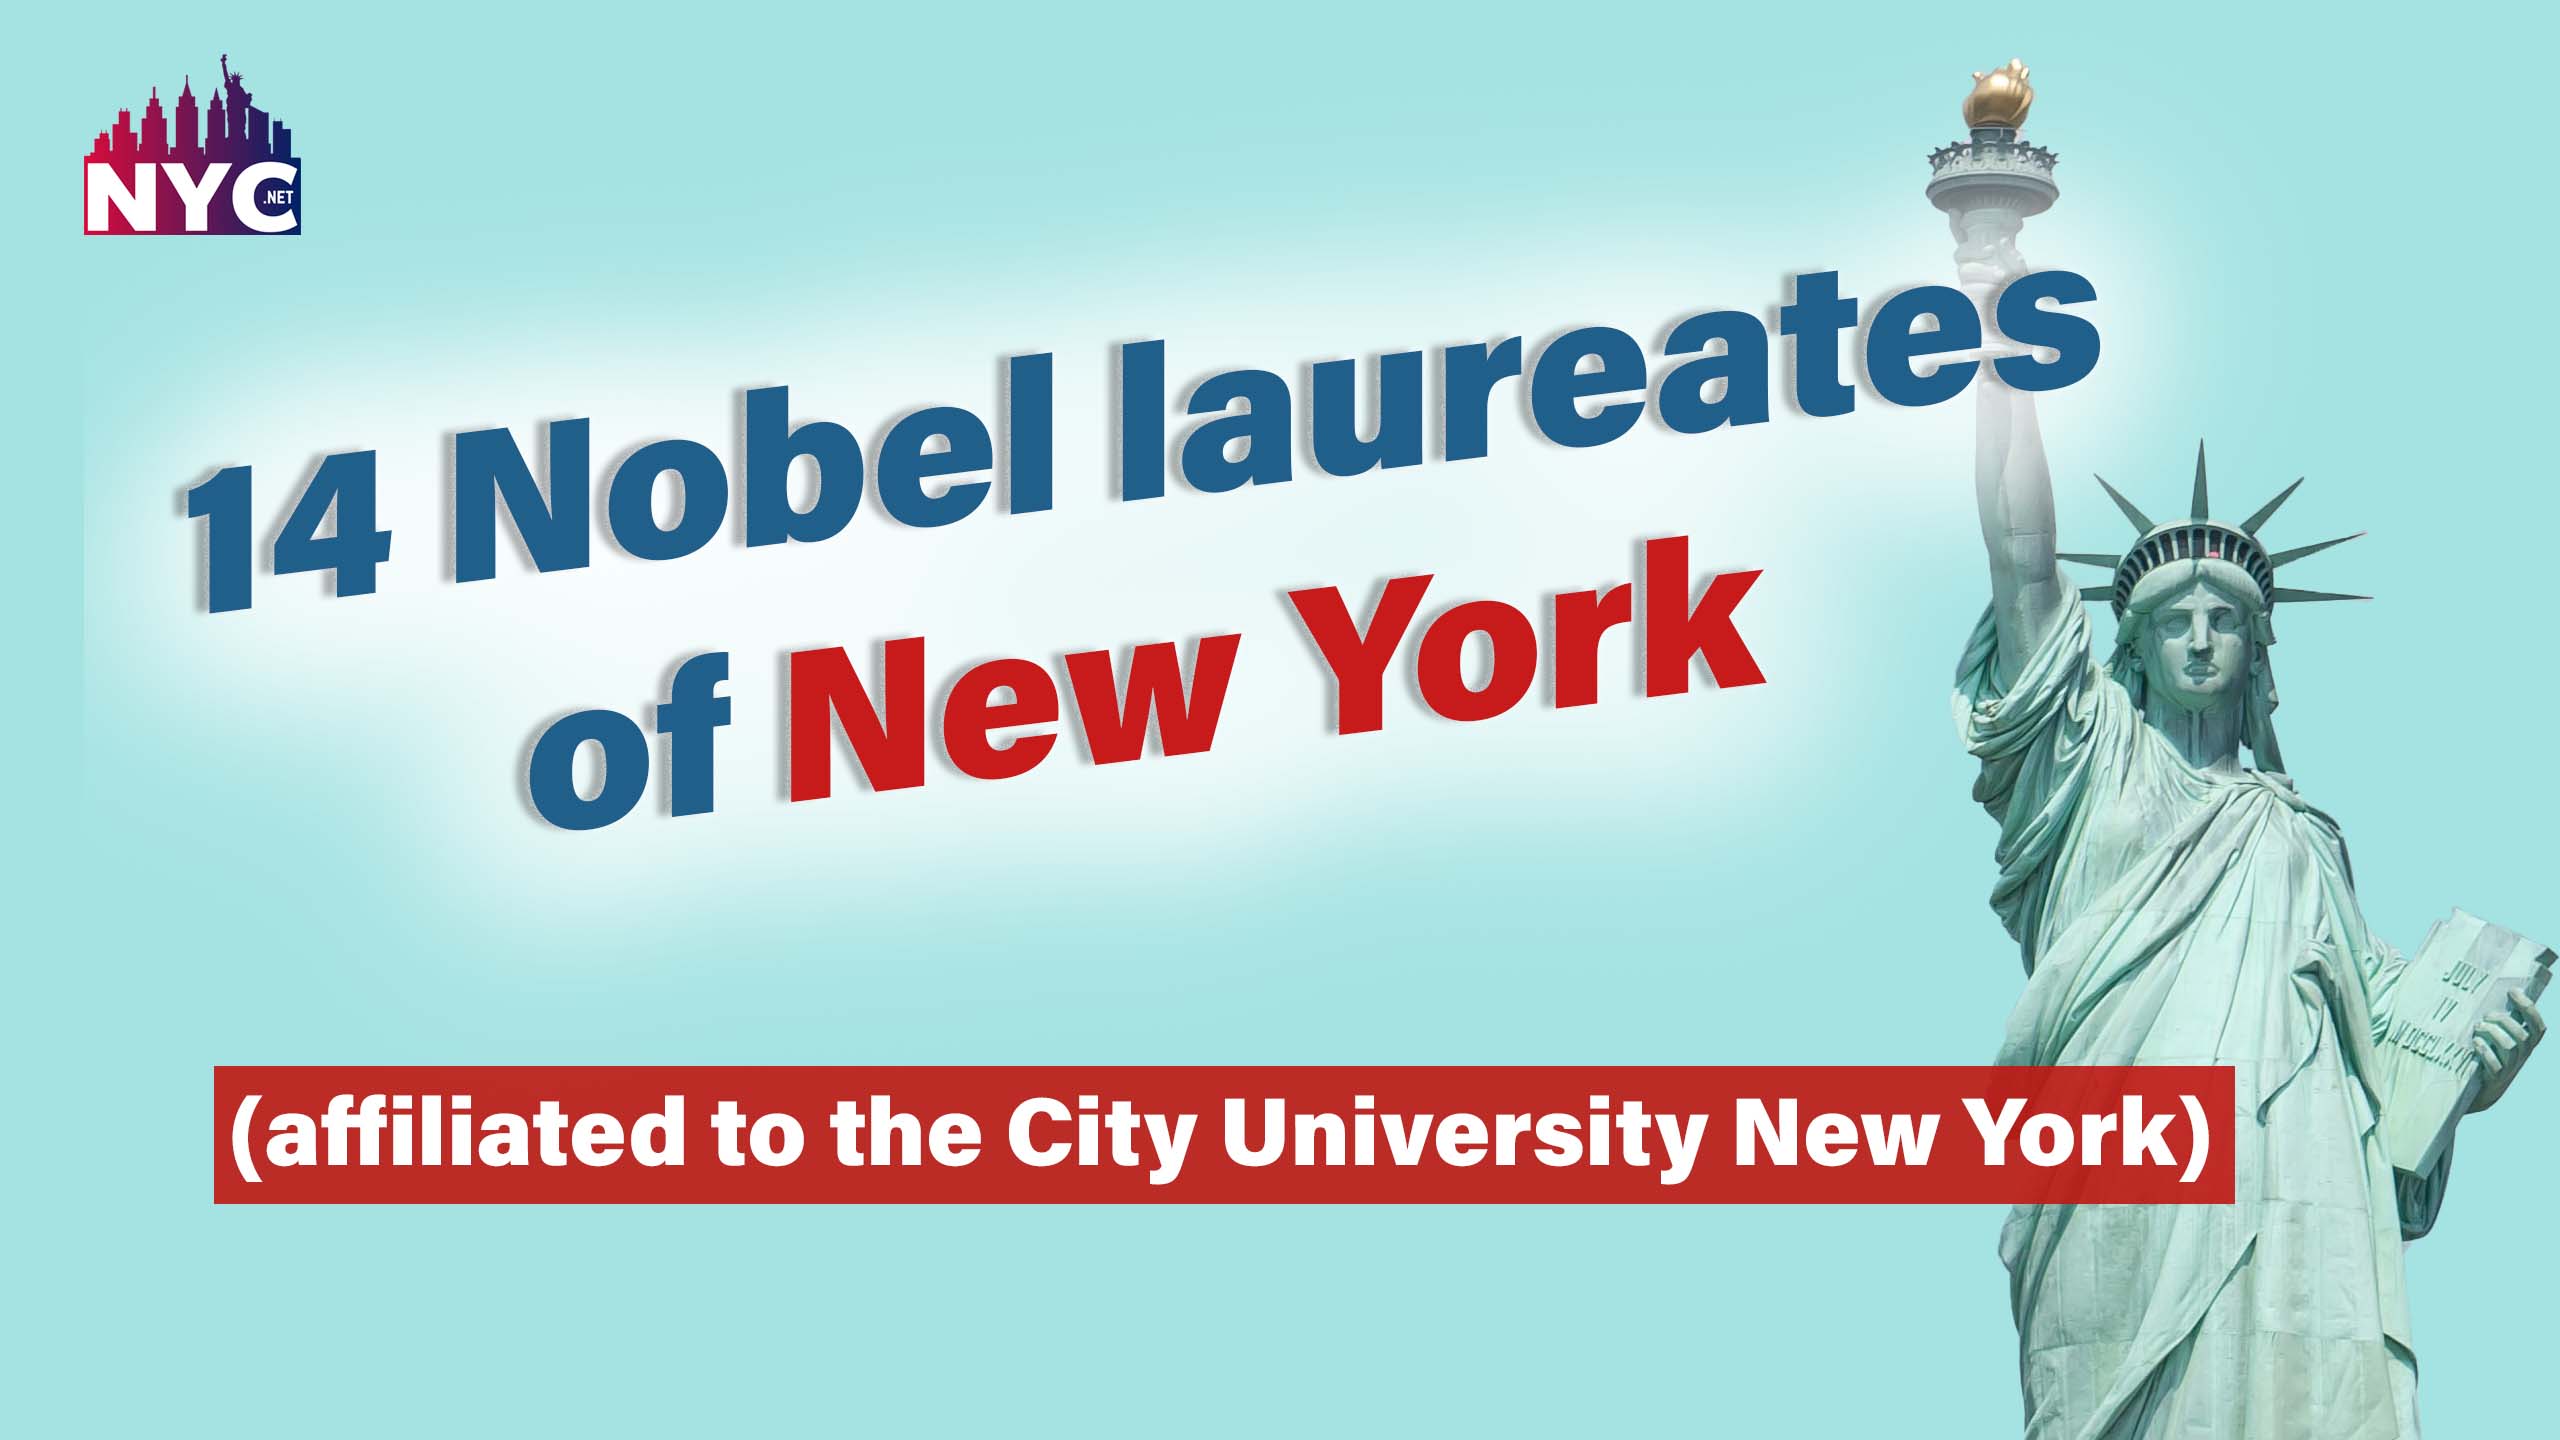 nobel laureates of New York